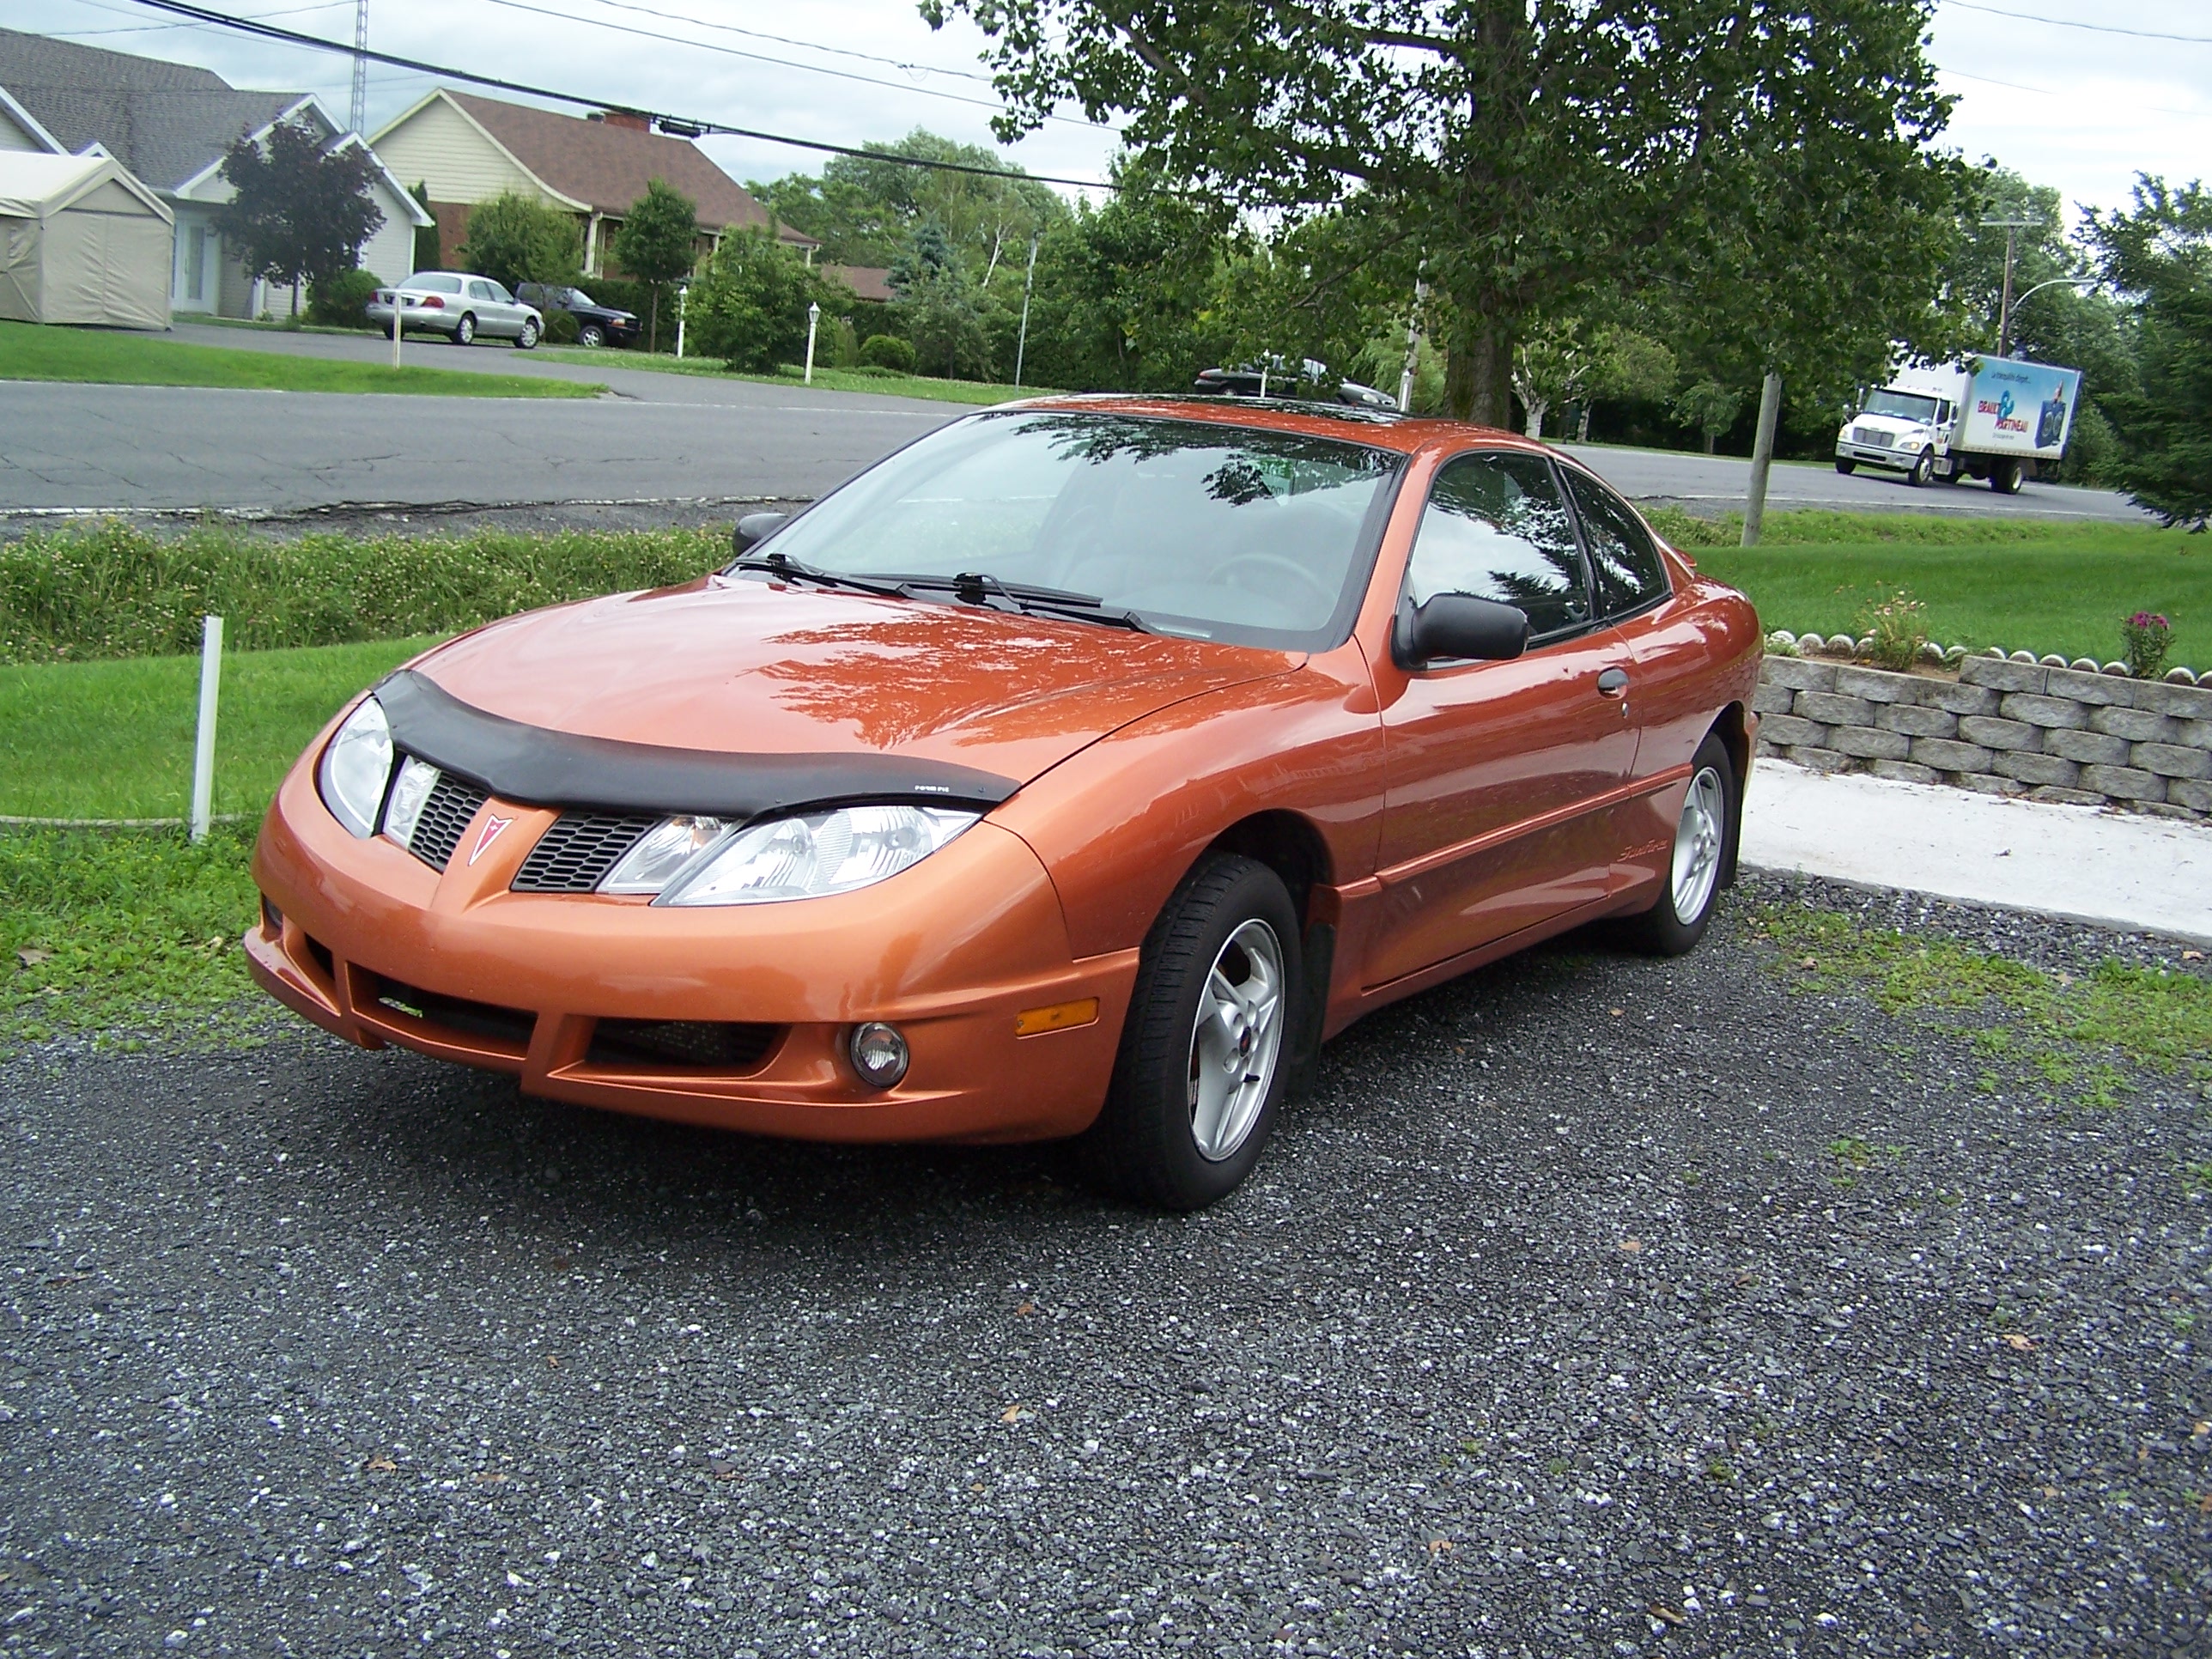  2005 Pontiac Sunfire sl